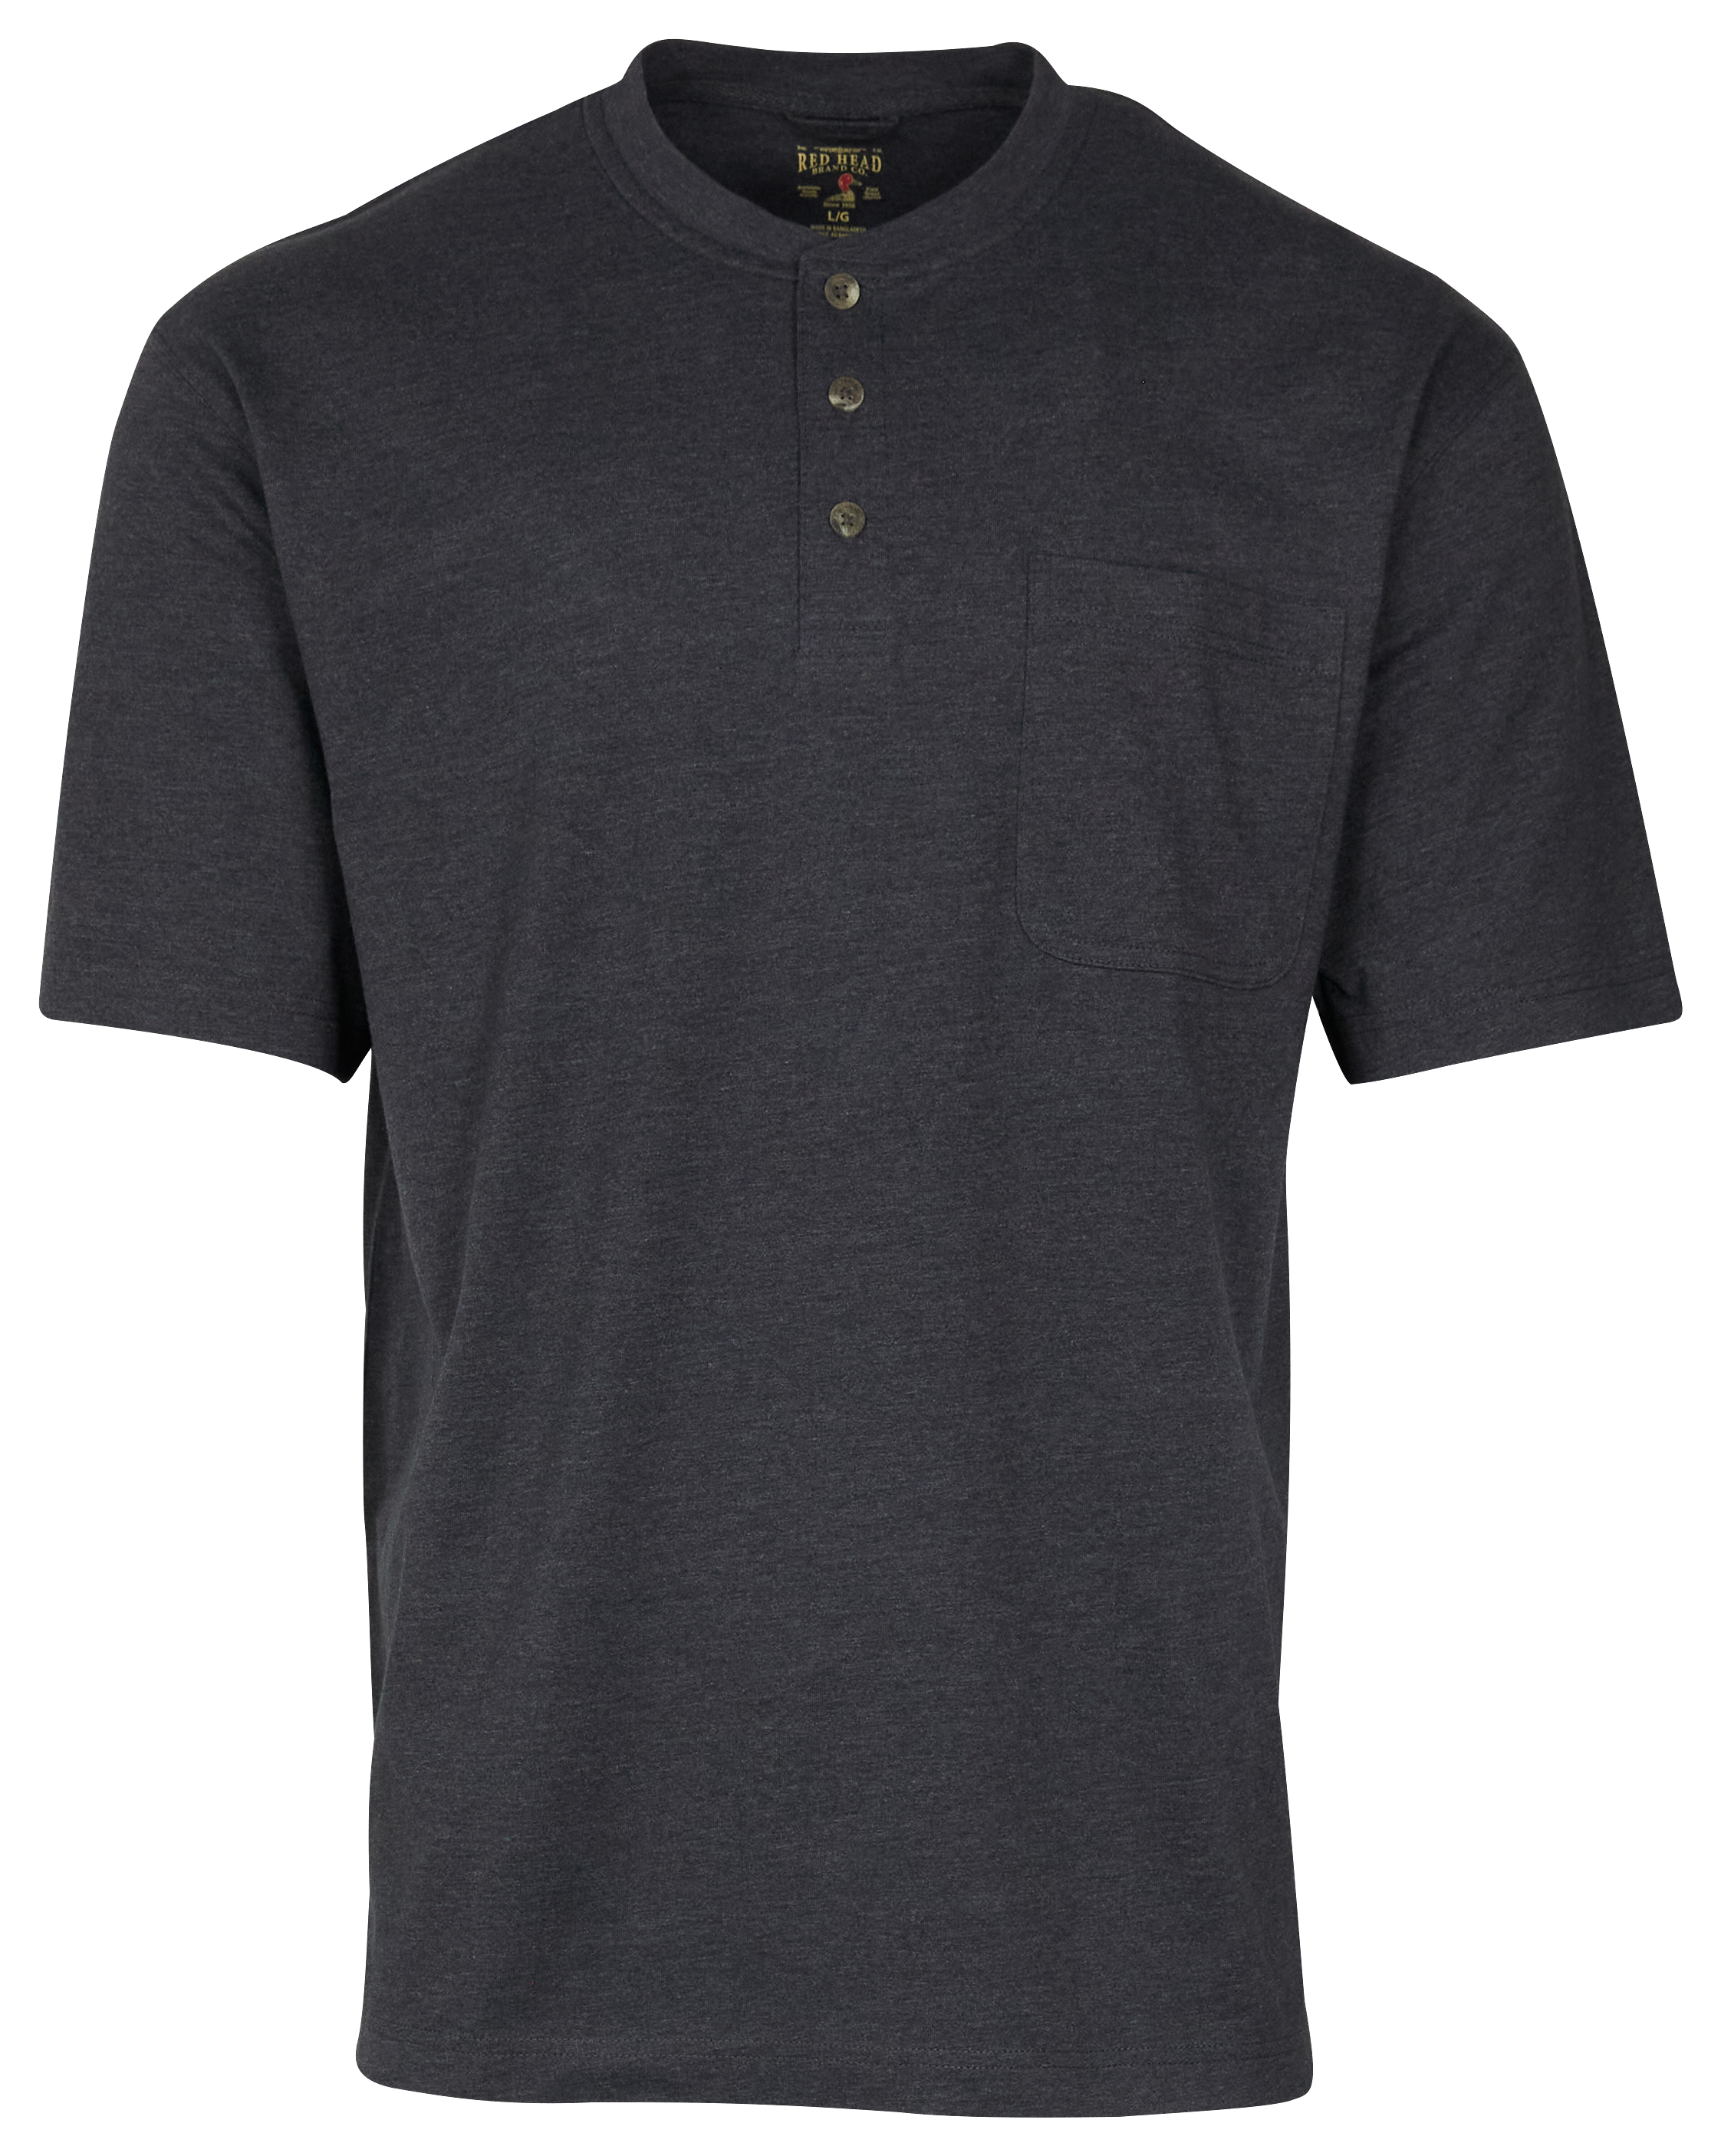 RedHead Henley Pocket Short-Sleeve Shirt for Men - Charcoal Heather - 2XL